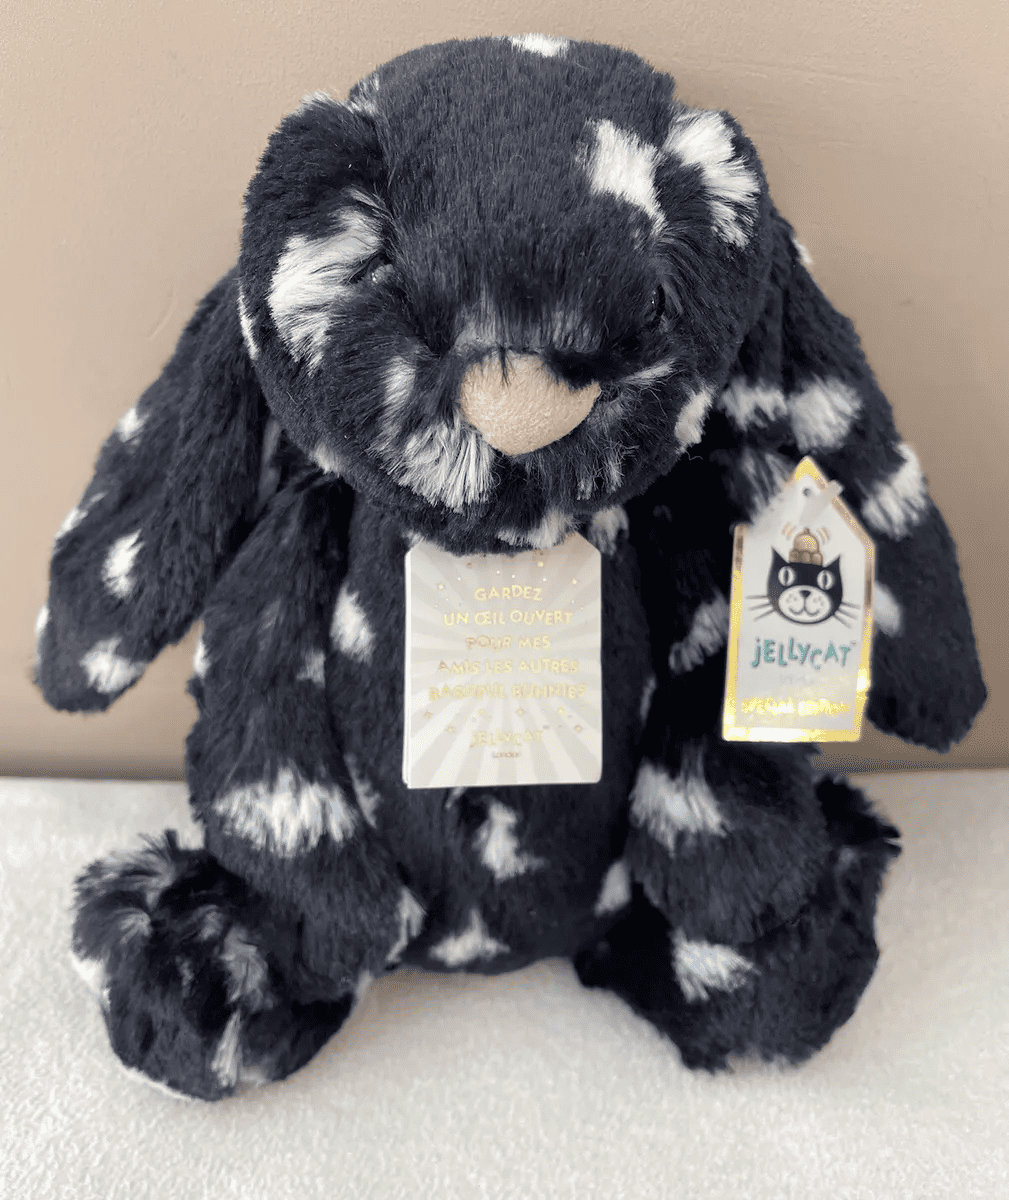 Jellycat Special Edition Paloma Bashful Bunny Soft Toy Black White Spot BNWT